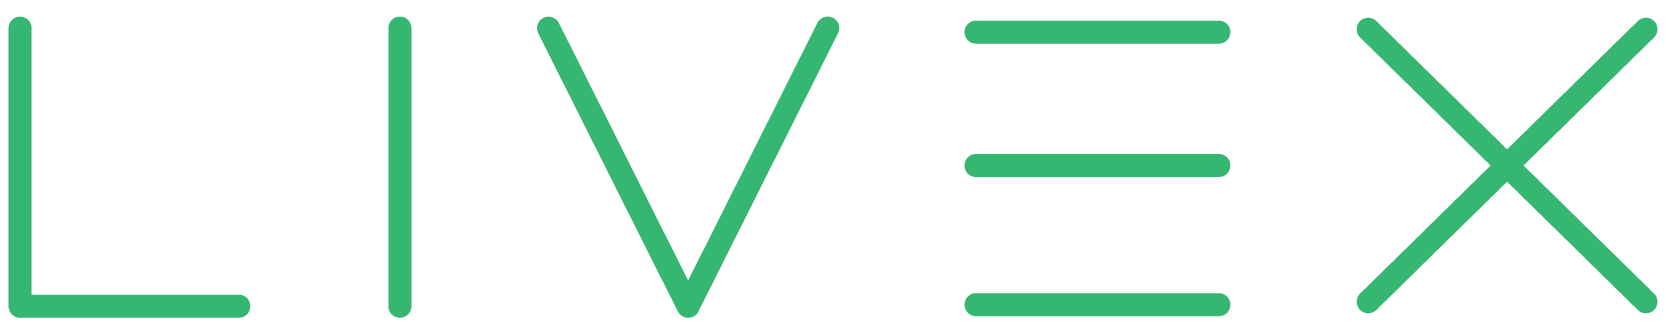 Livex logo